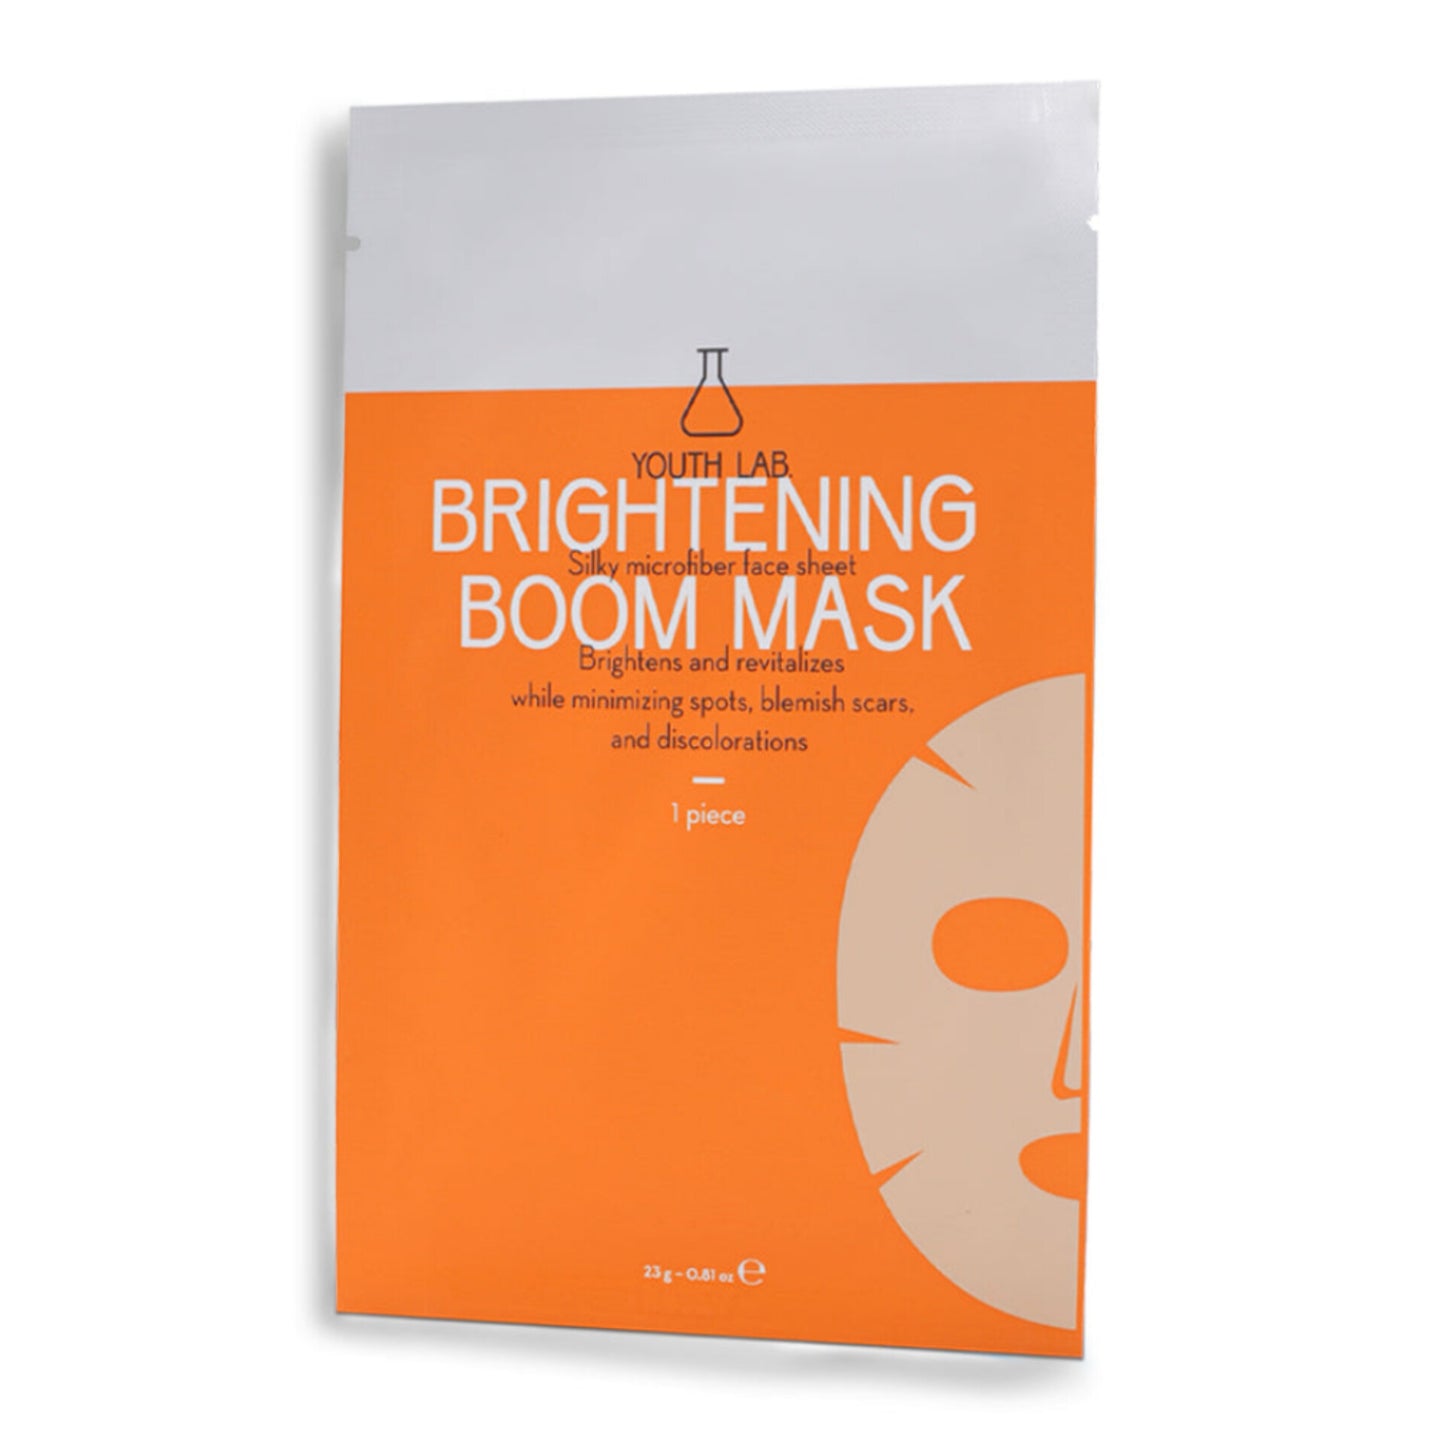 Youth Lab Brightening Vit-C Sheet Mask